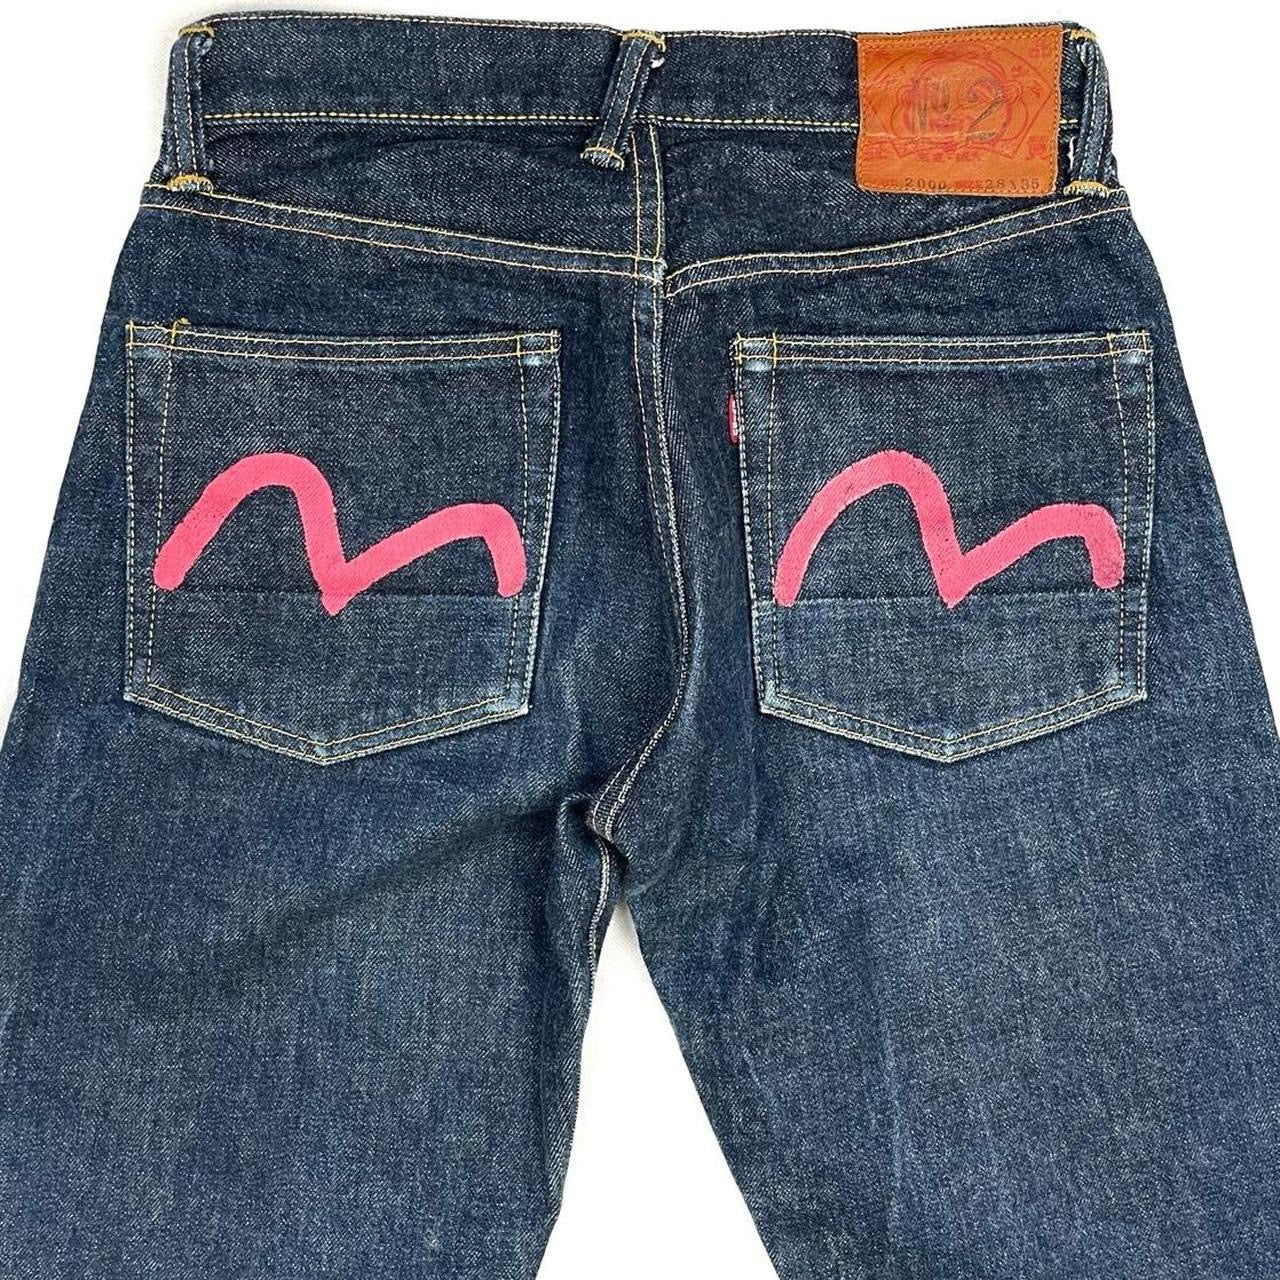 Evisu Selvedge Jeans With Double Pink Daicocks ( W28 )